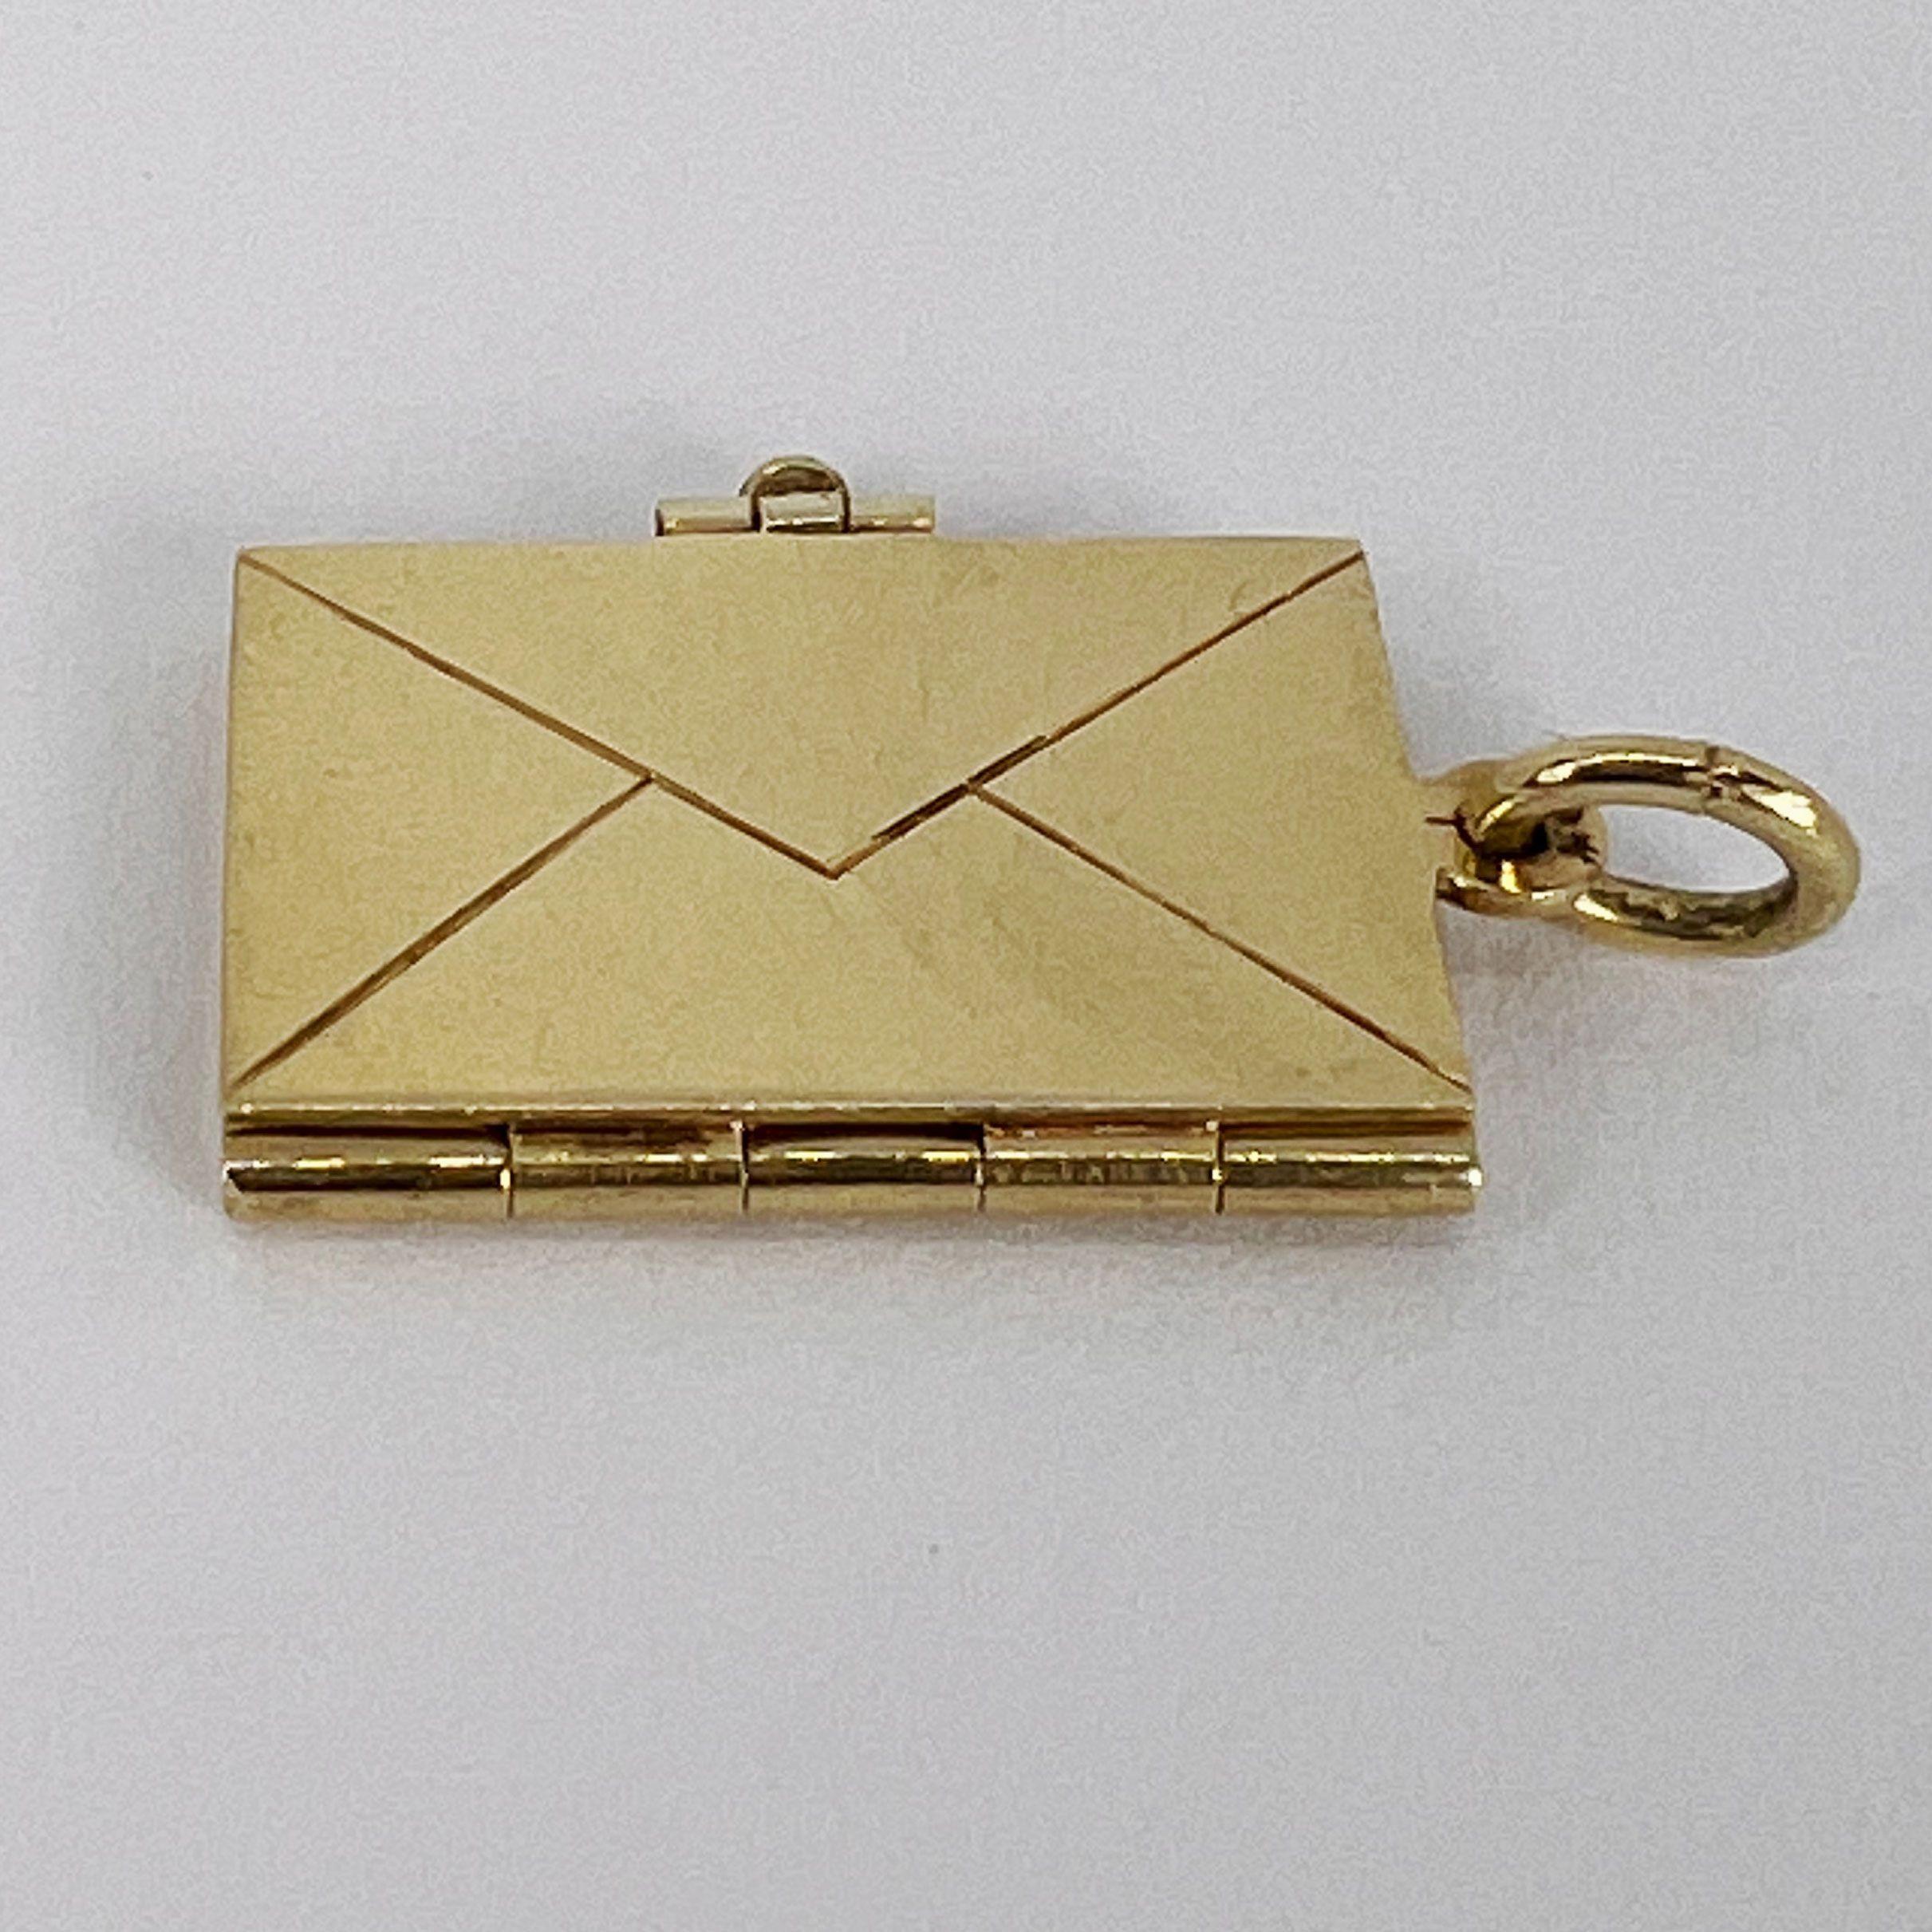 Envelope and Letter 14K Yellow Gold Enamel Stamp Charm Pendant 2